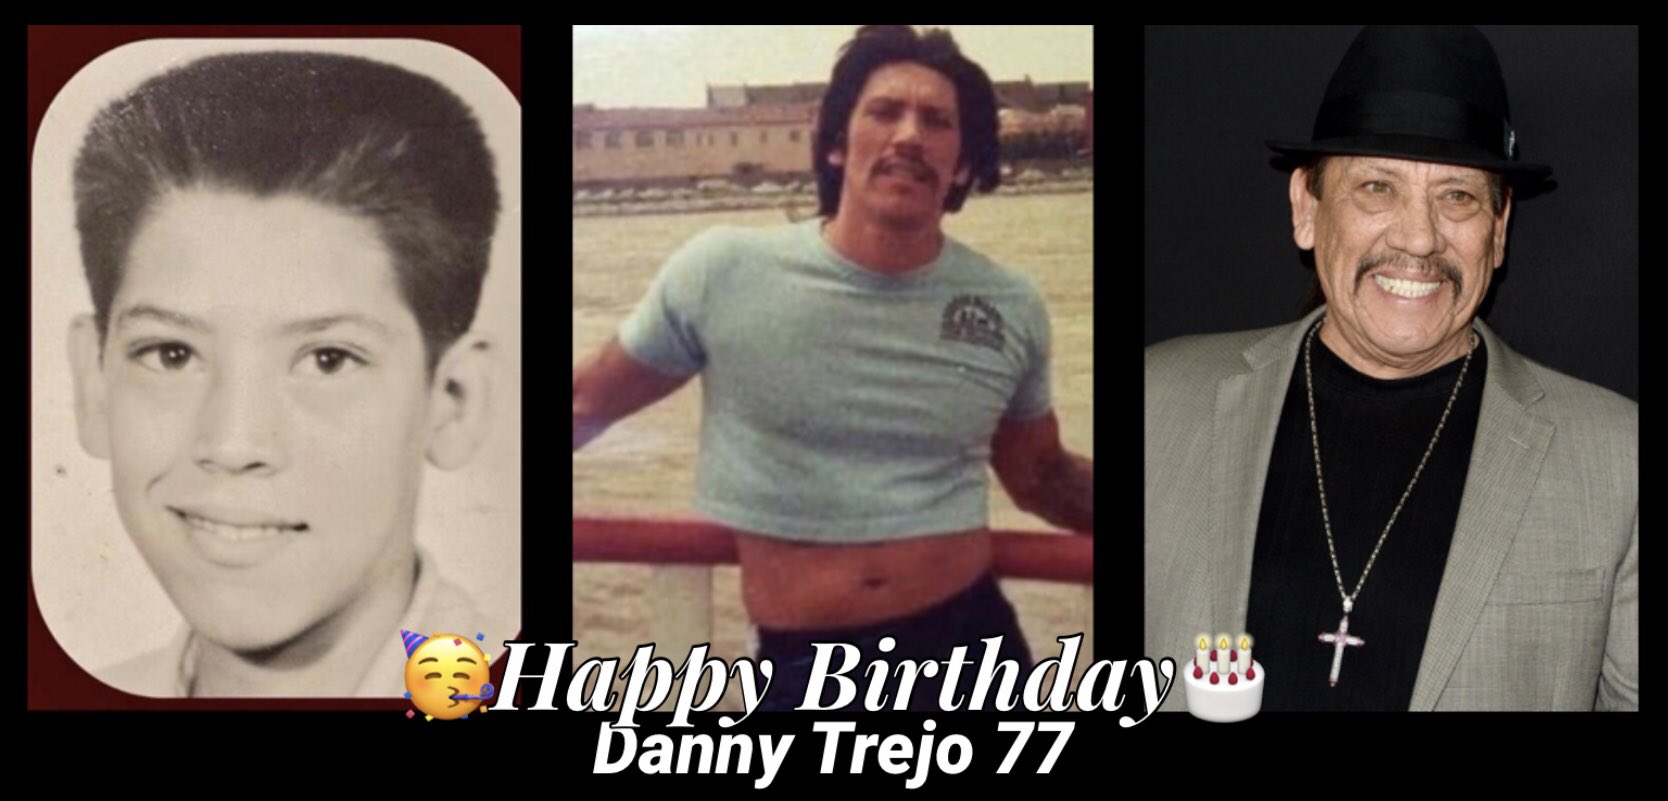 Happy birthday to Danny Trejo! 